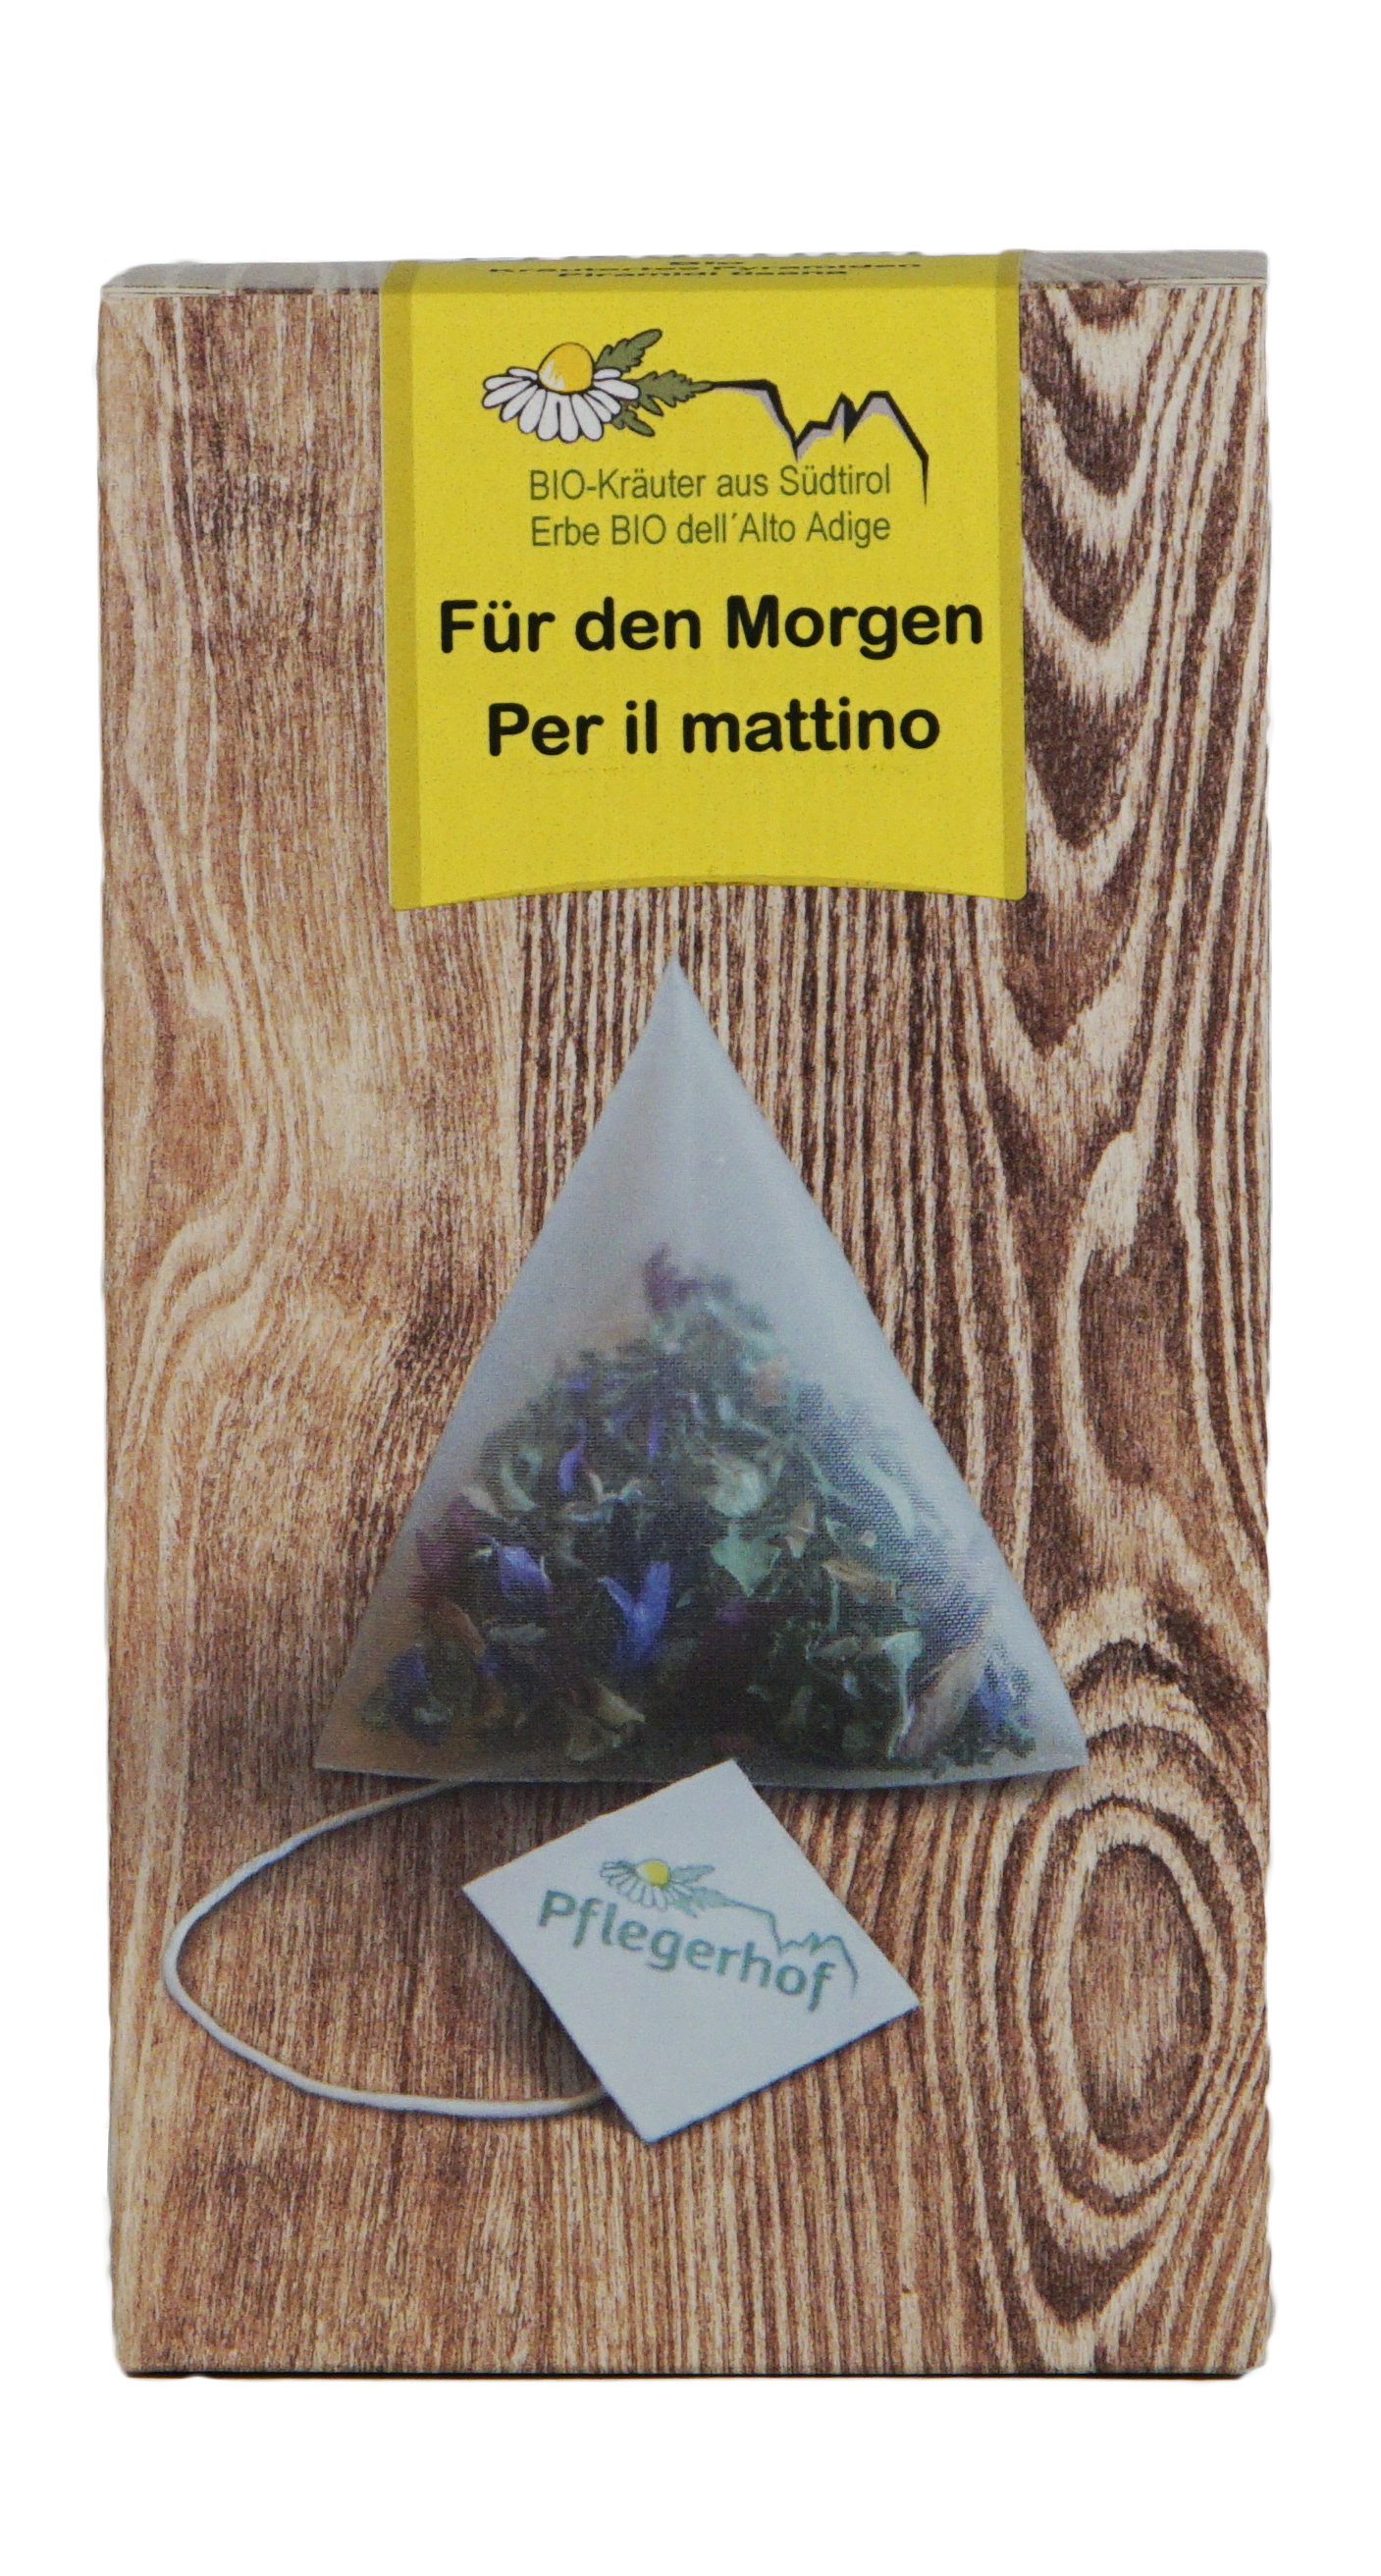 Tè alle erbe in bustina - Per il mattino | Pflegerhof BIO 18 g